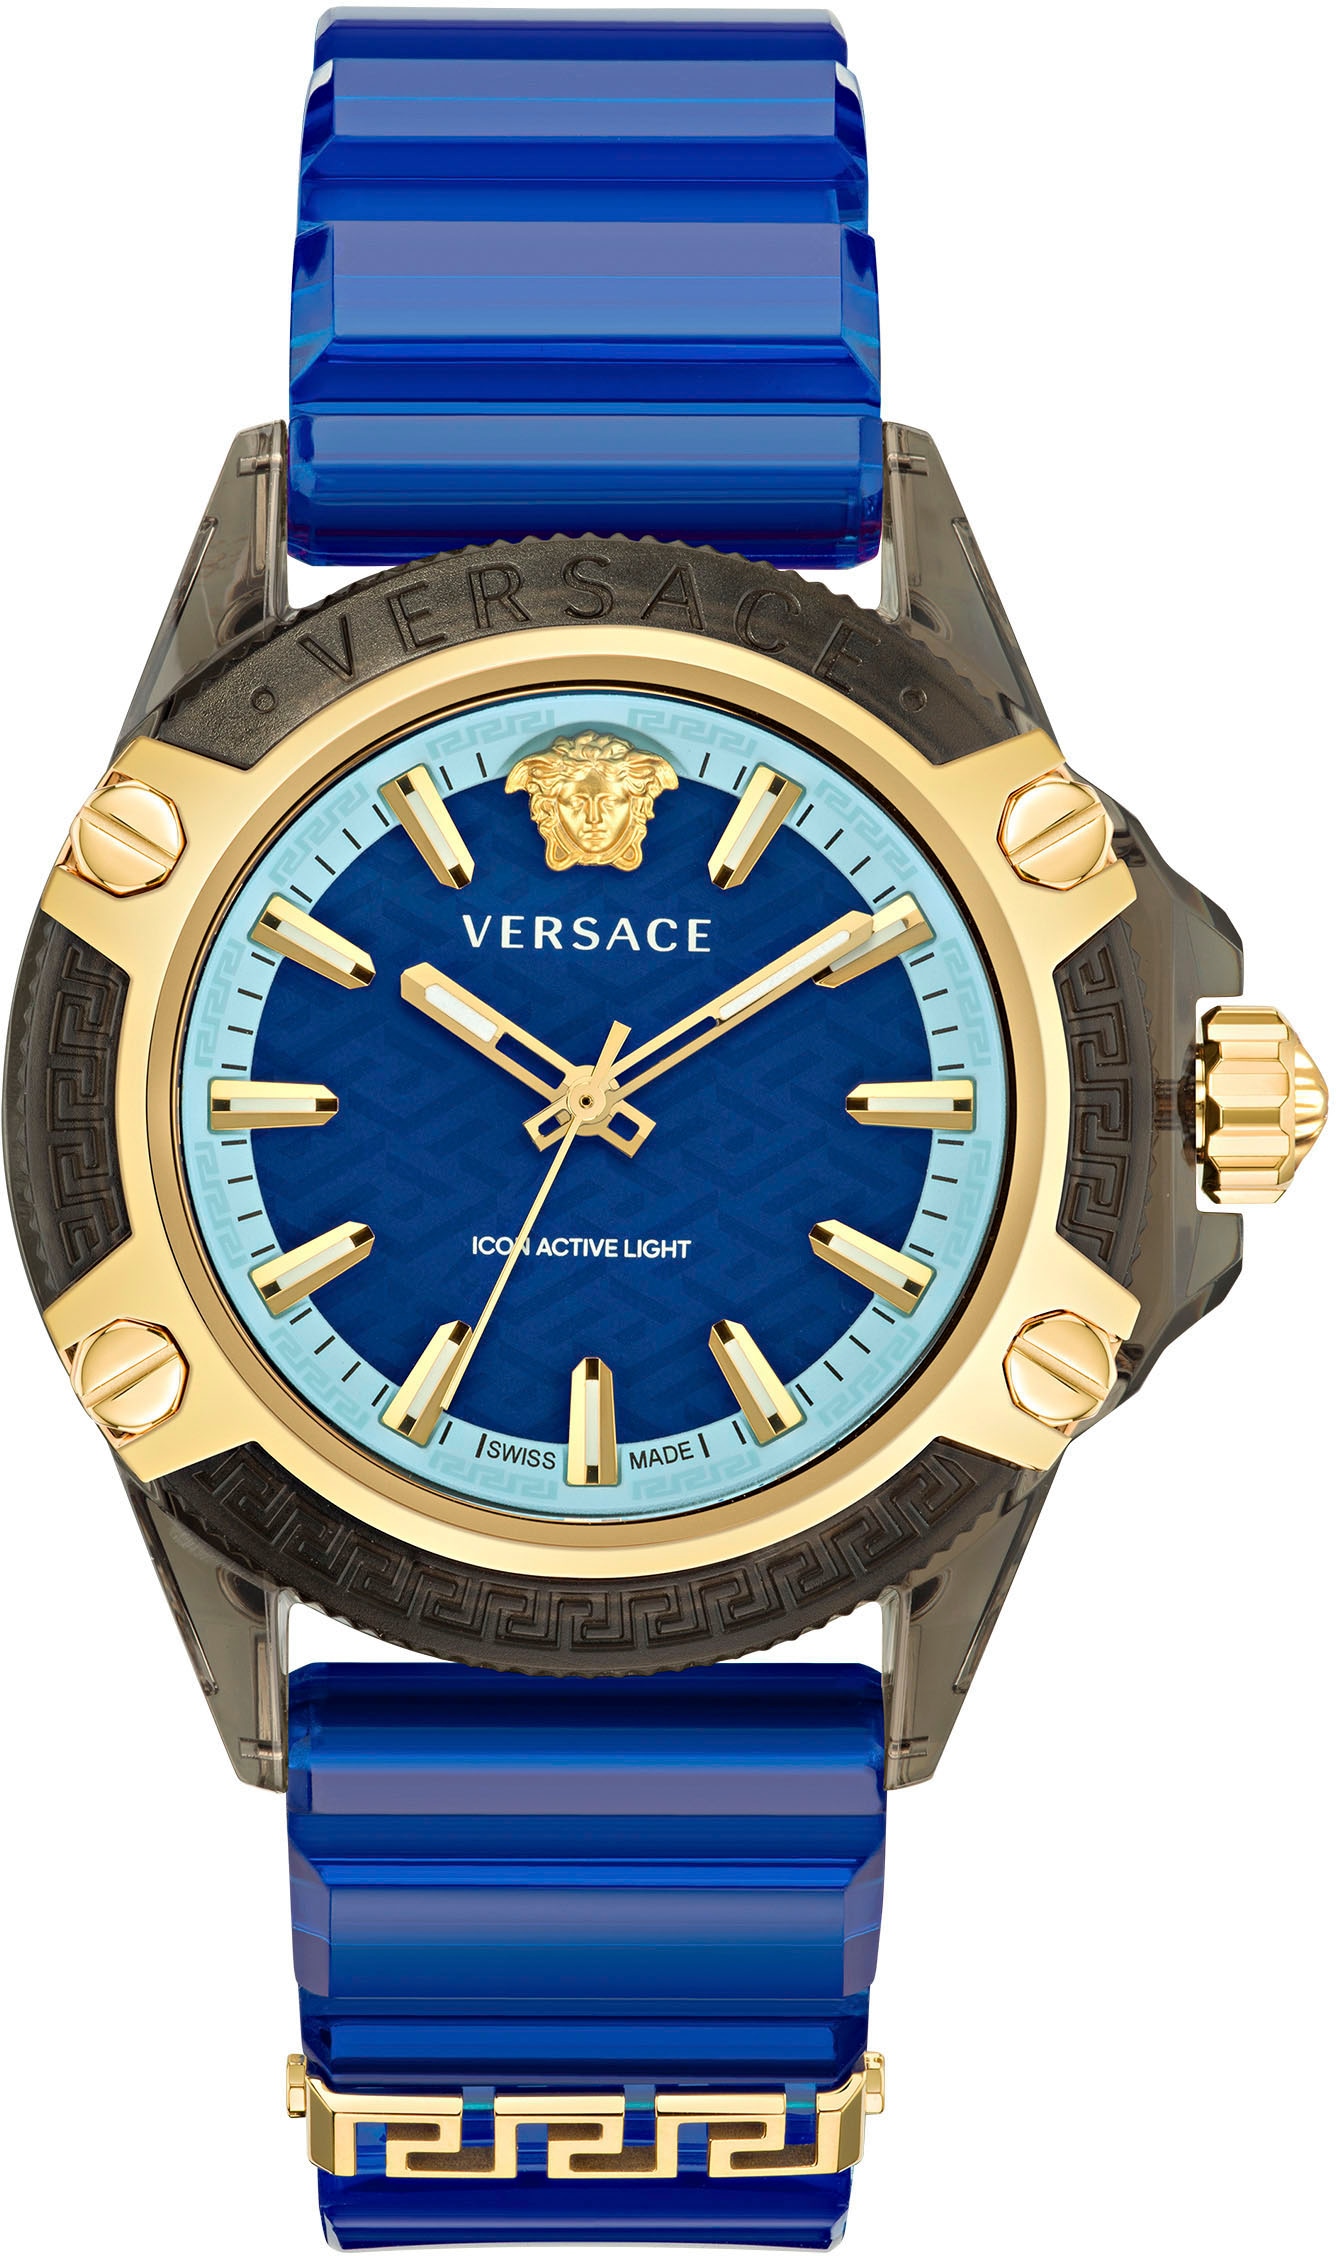 Versace Quarzuhr »ICON ACTIVE, VE6E00323«, Armbanduhr, Herrenuhr, Swiss Made